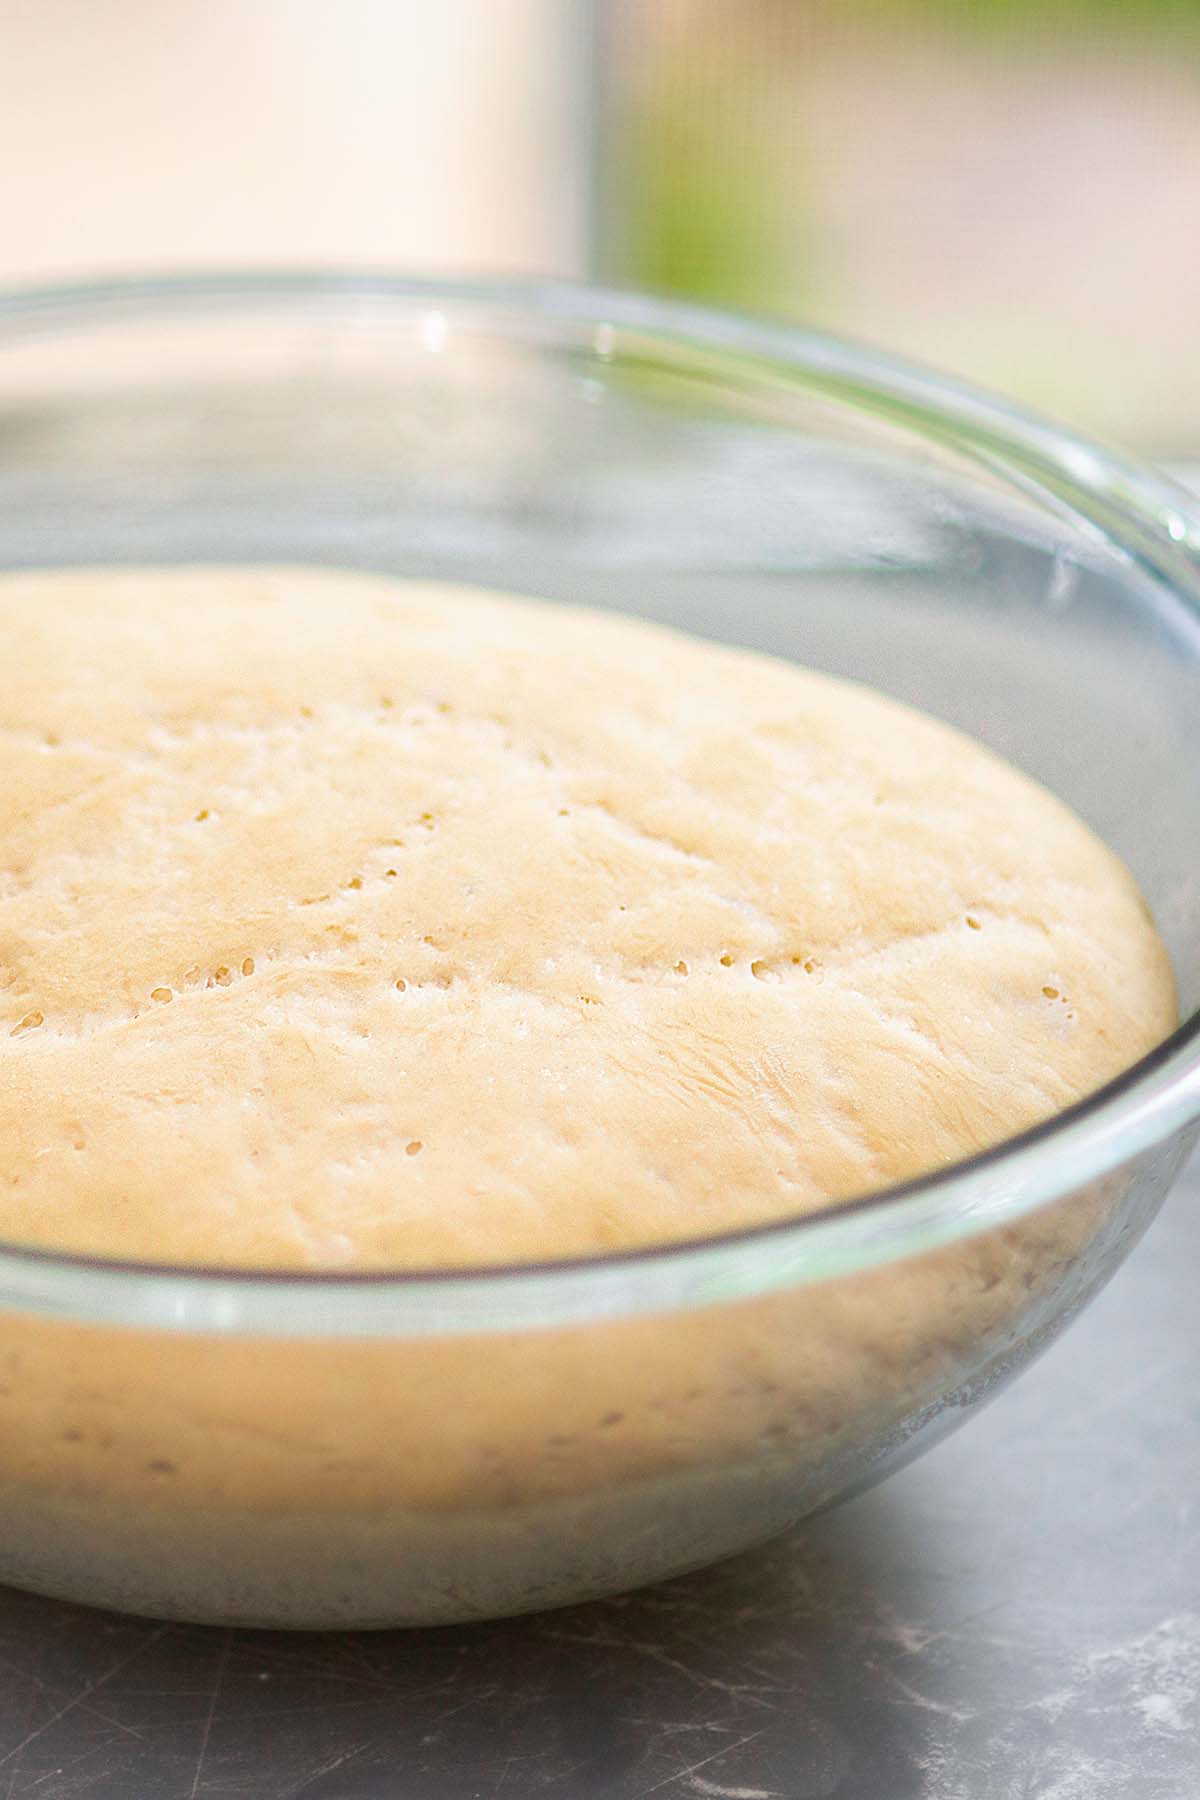 White bread dough rising in a glass bowl.